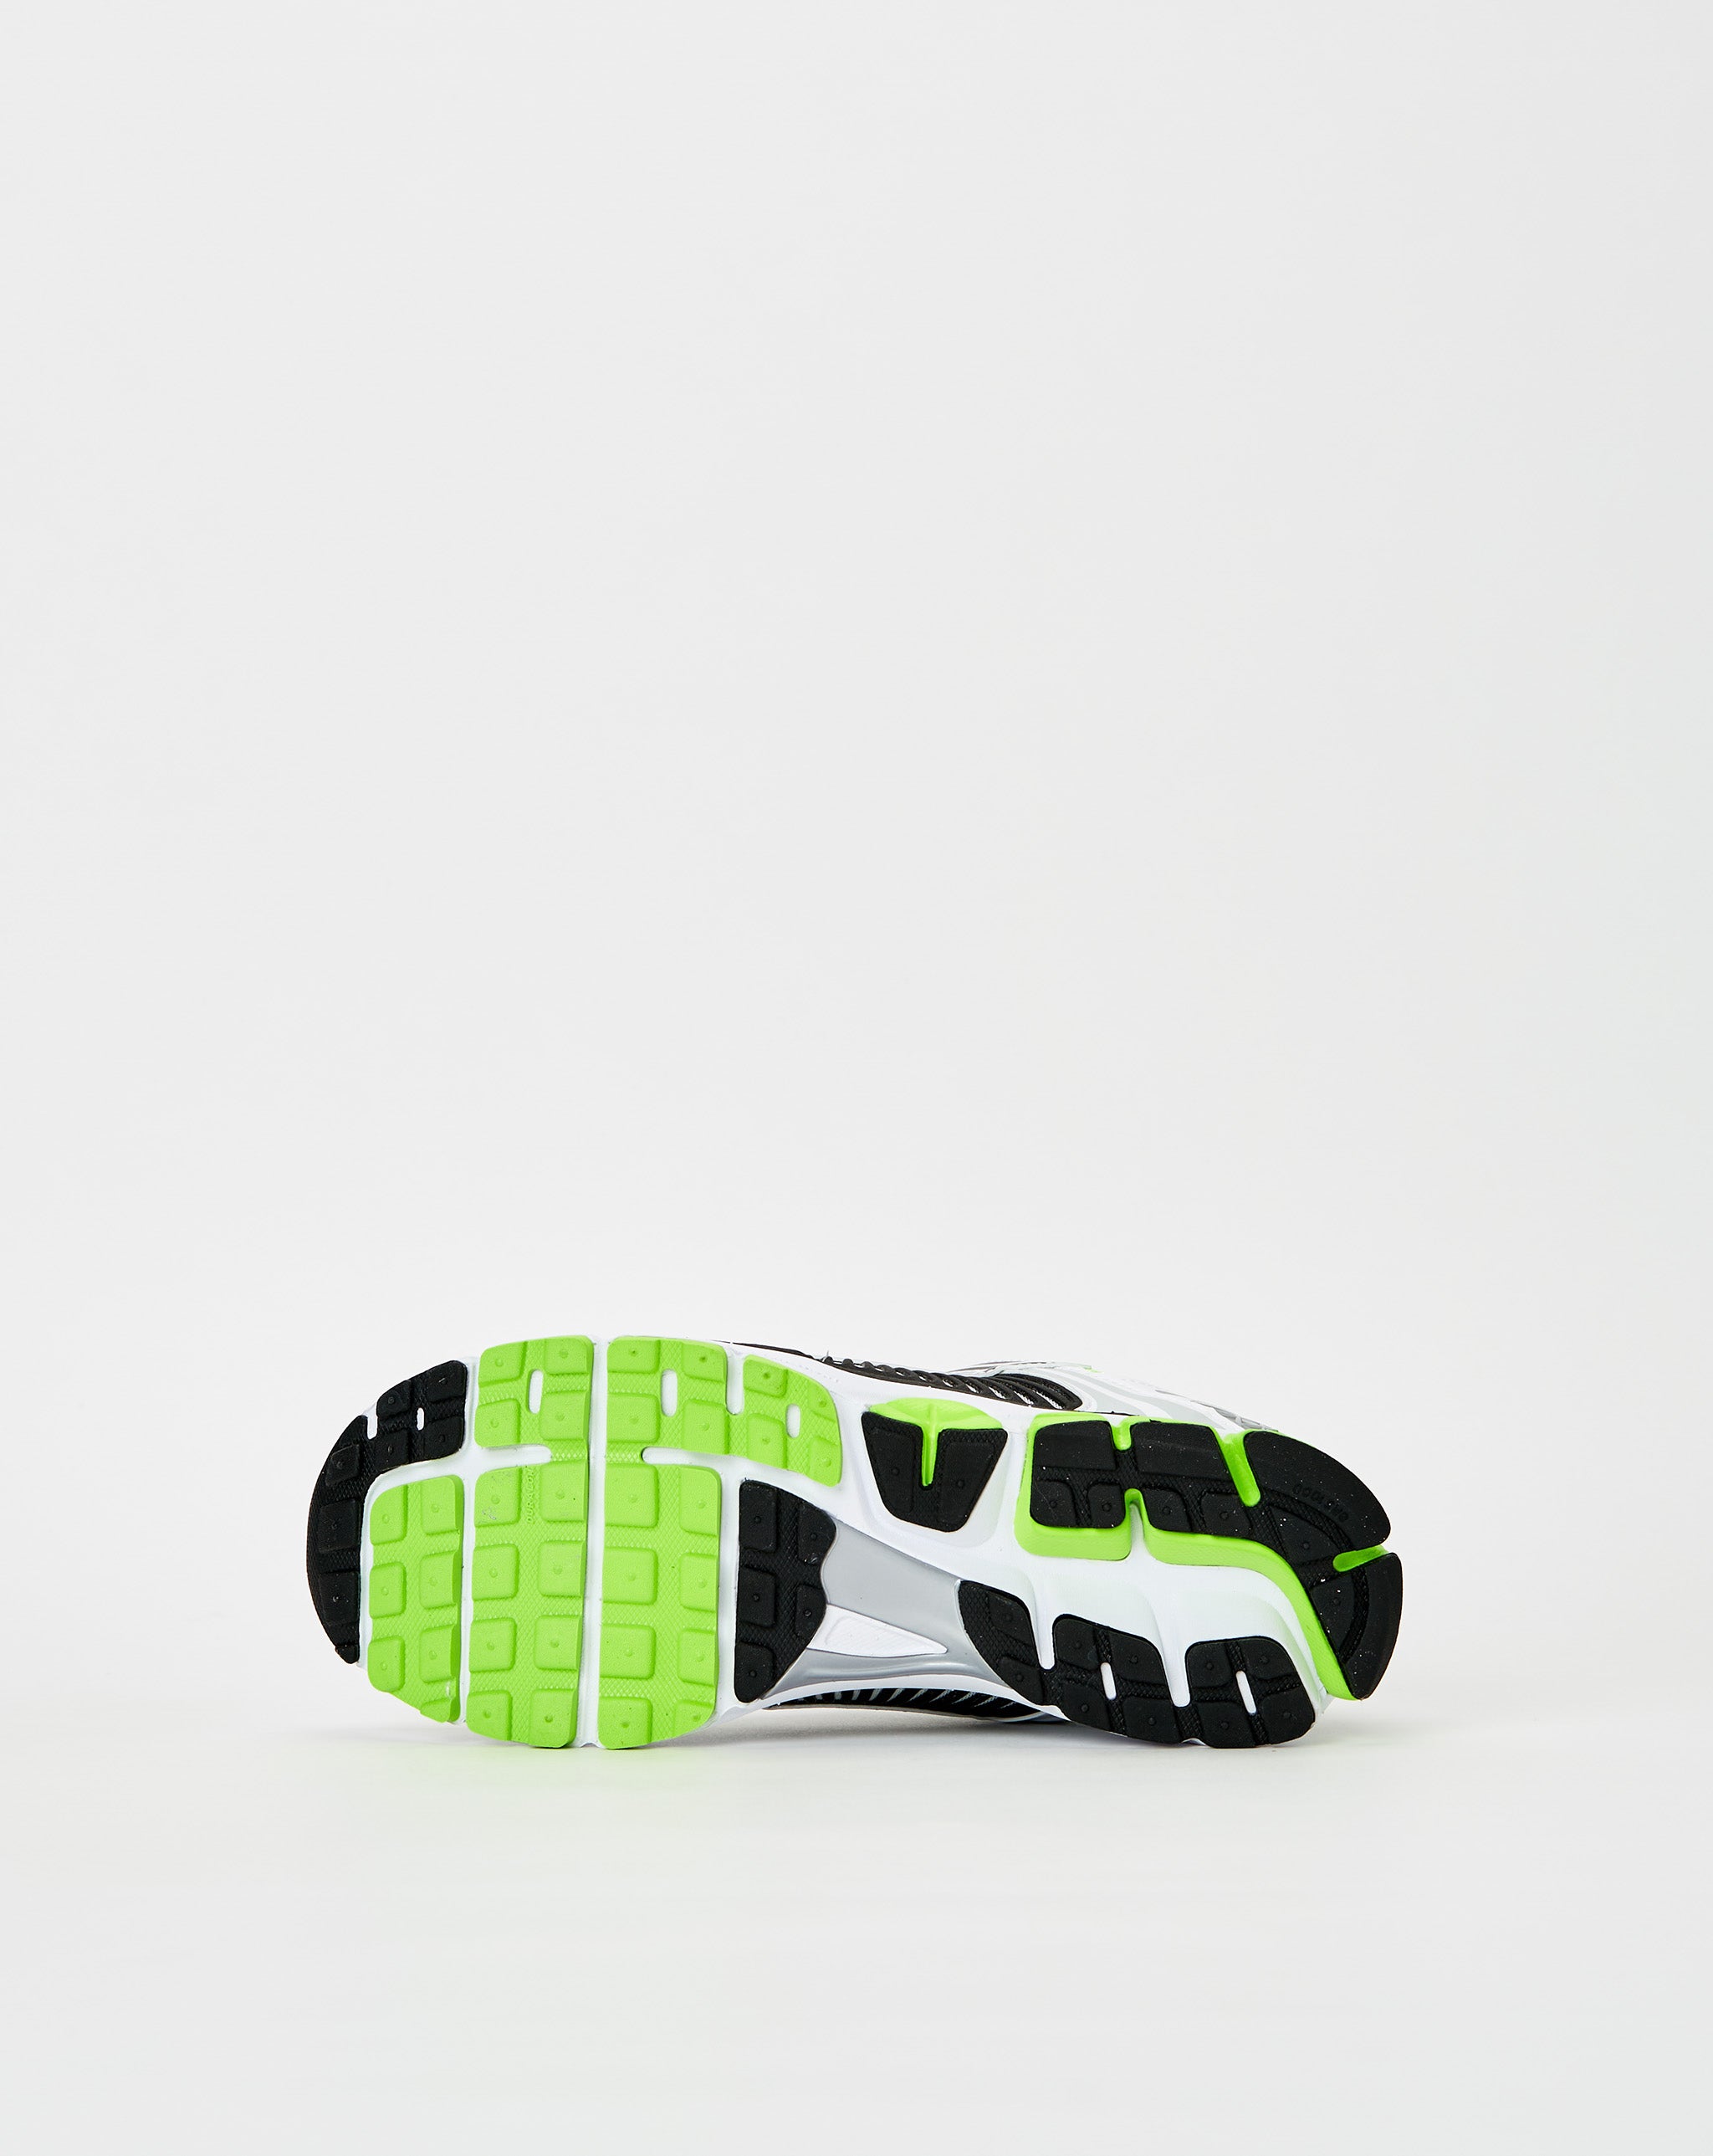 Nike Zoom Vomero 5 SE SP  - Cheap Cerbe Jordan outlet